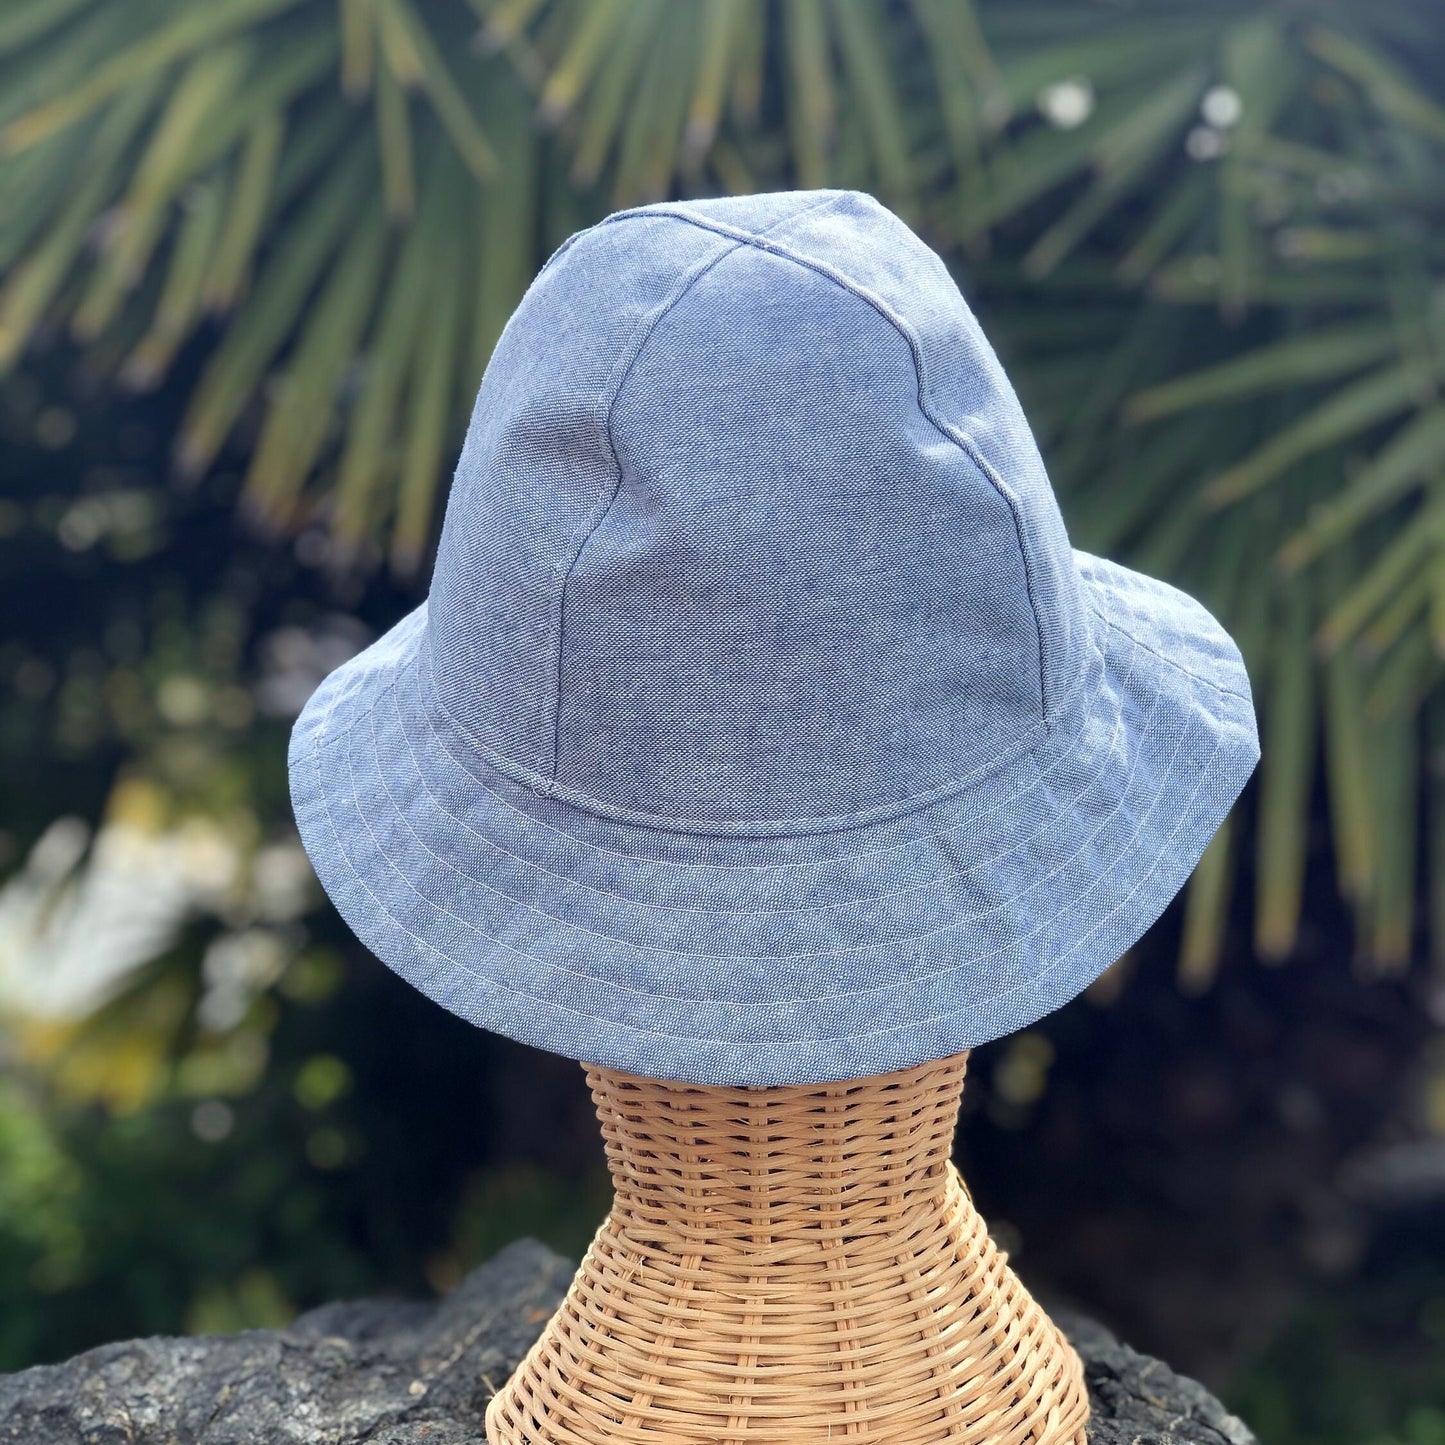 Baby Bucket Hat, Blue Fabric Hat, Boy Sun Hat, Toddler Beach Hat, Newborn Summer Hat, Infant Beach Outfit, Washable Hat, Chin Straps